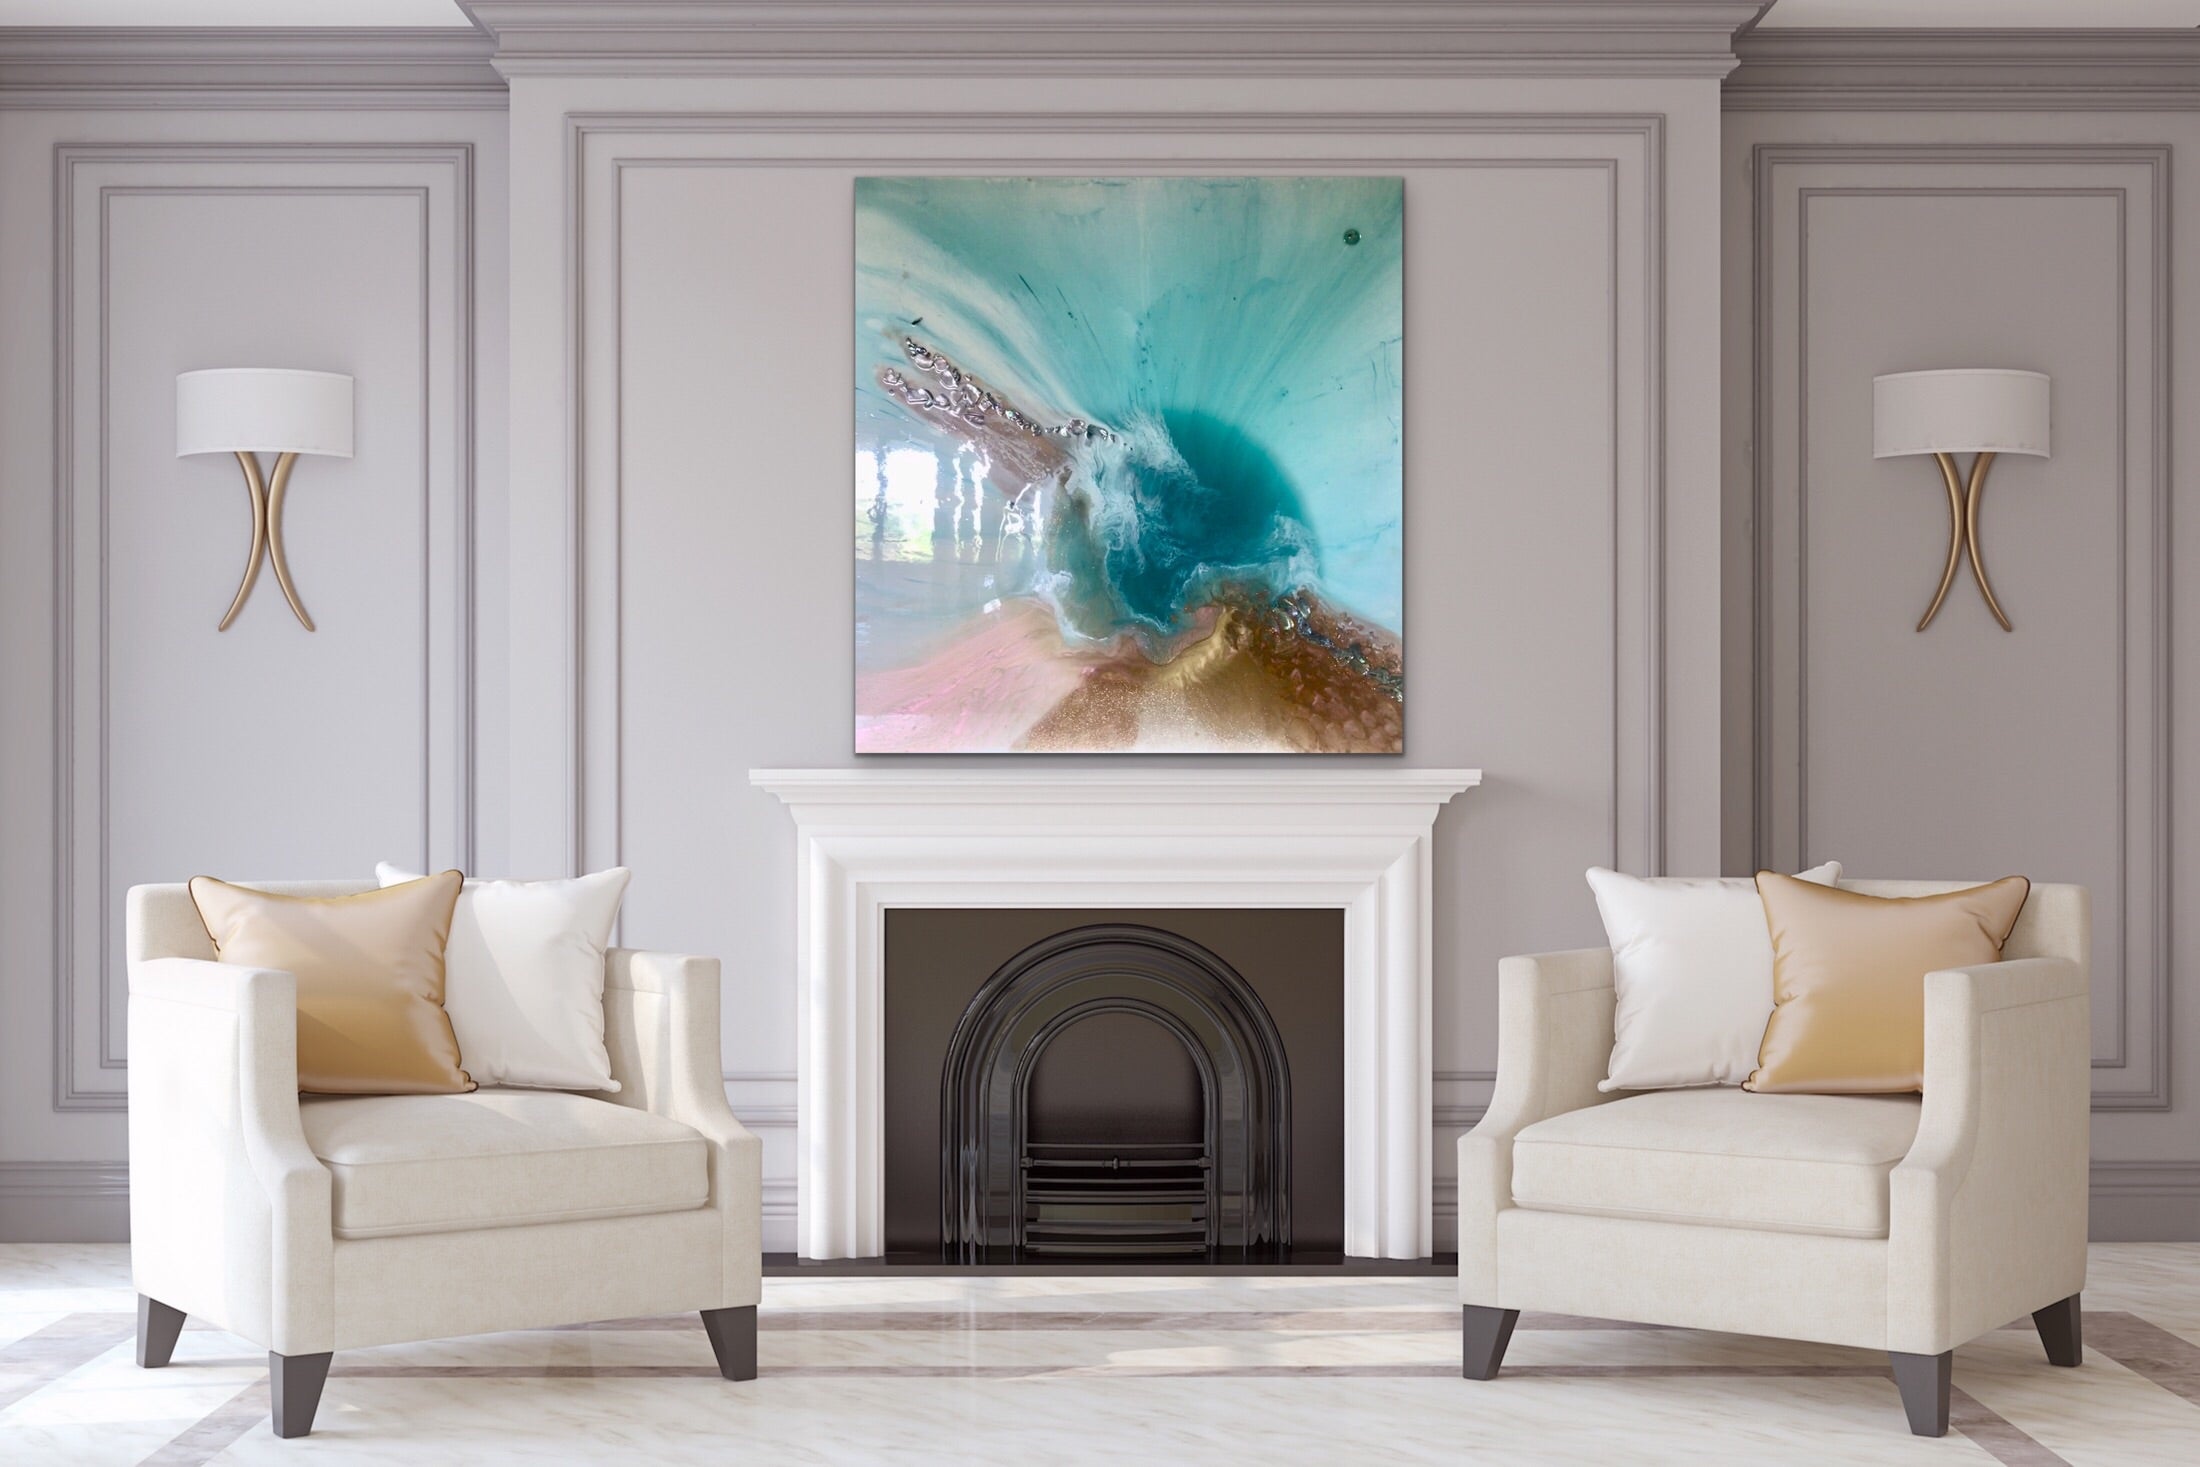 Teal Abstract Artwork. Ocean Blue. Aqua Bliss. Antuanelle 7 Abstract. Original 100x100cm